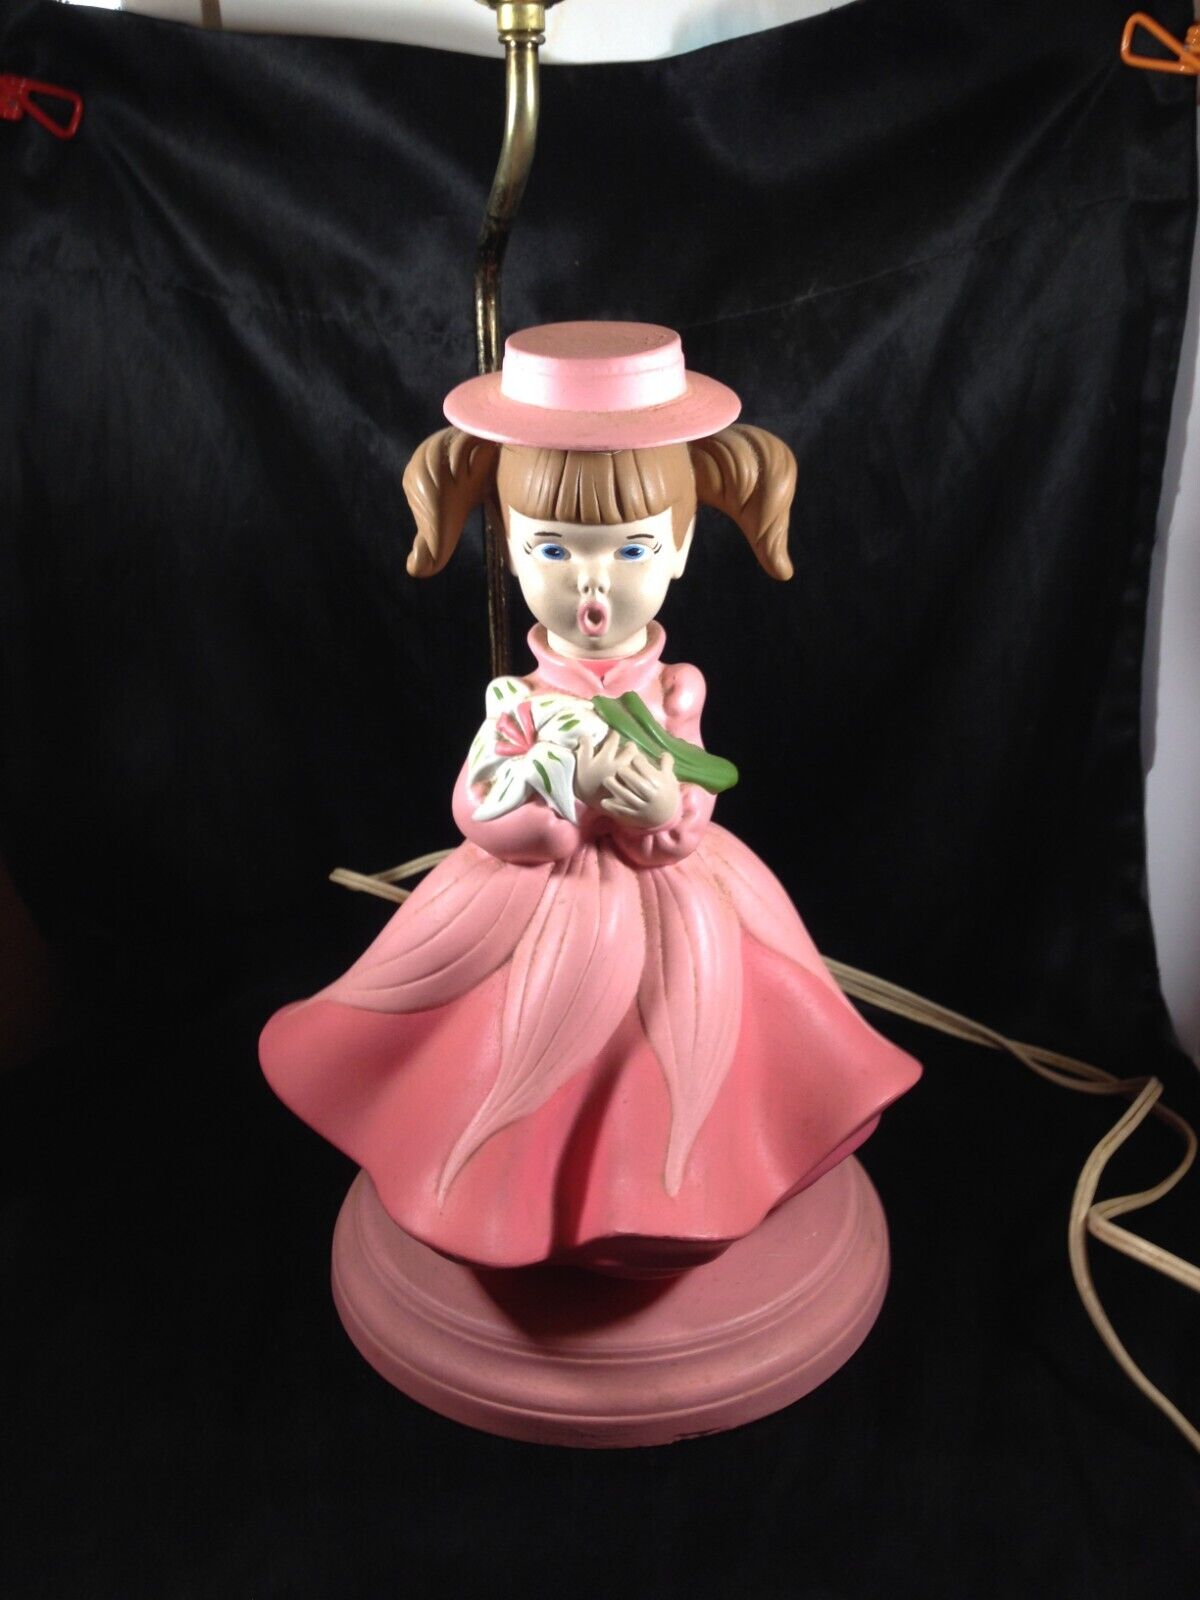 Vintage Holland Mold Ceramic Table Lamp Pink Floral Girl Figurine